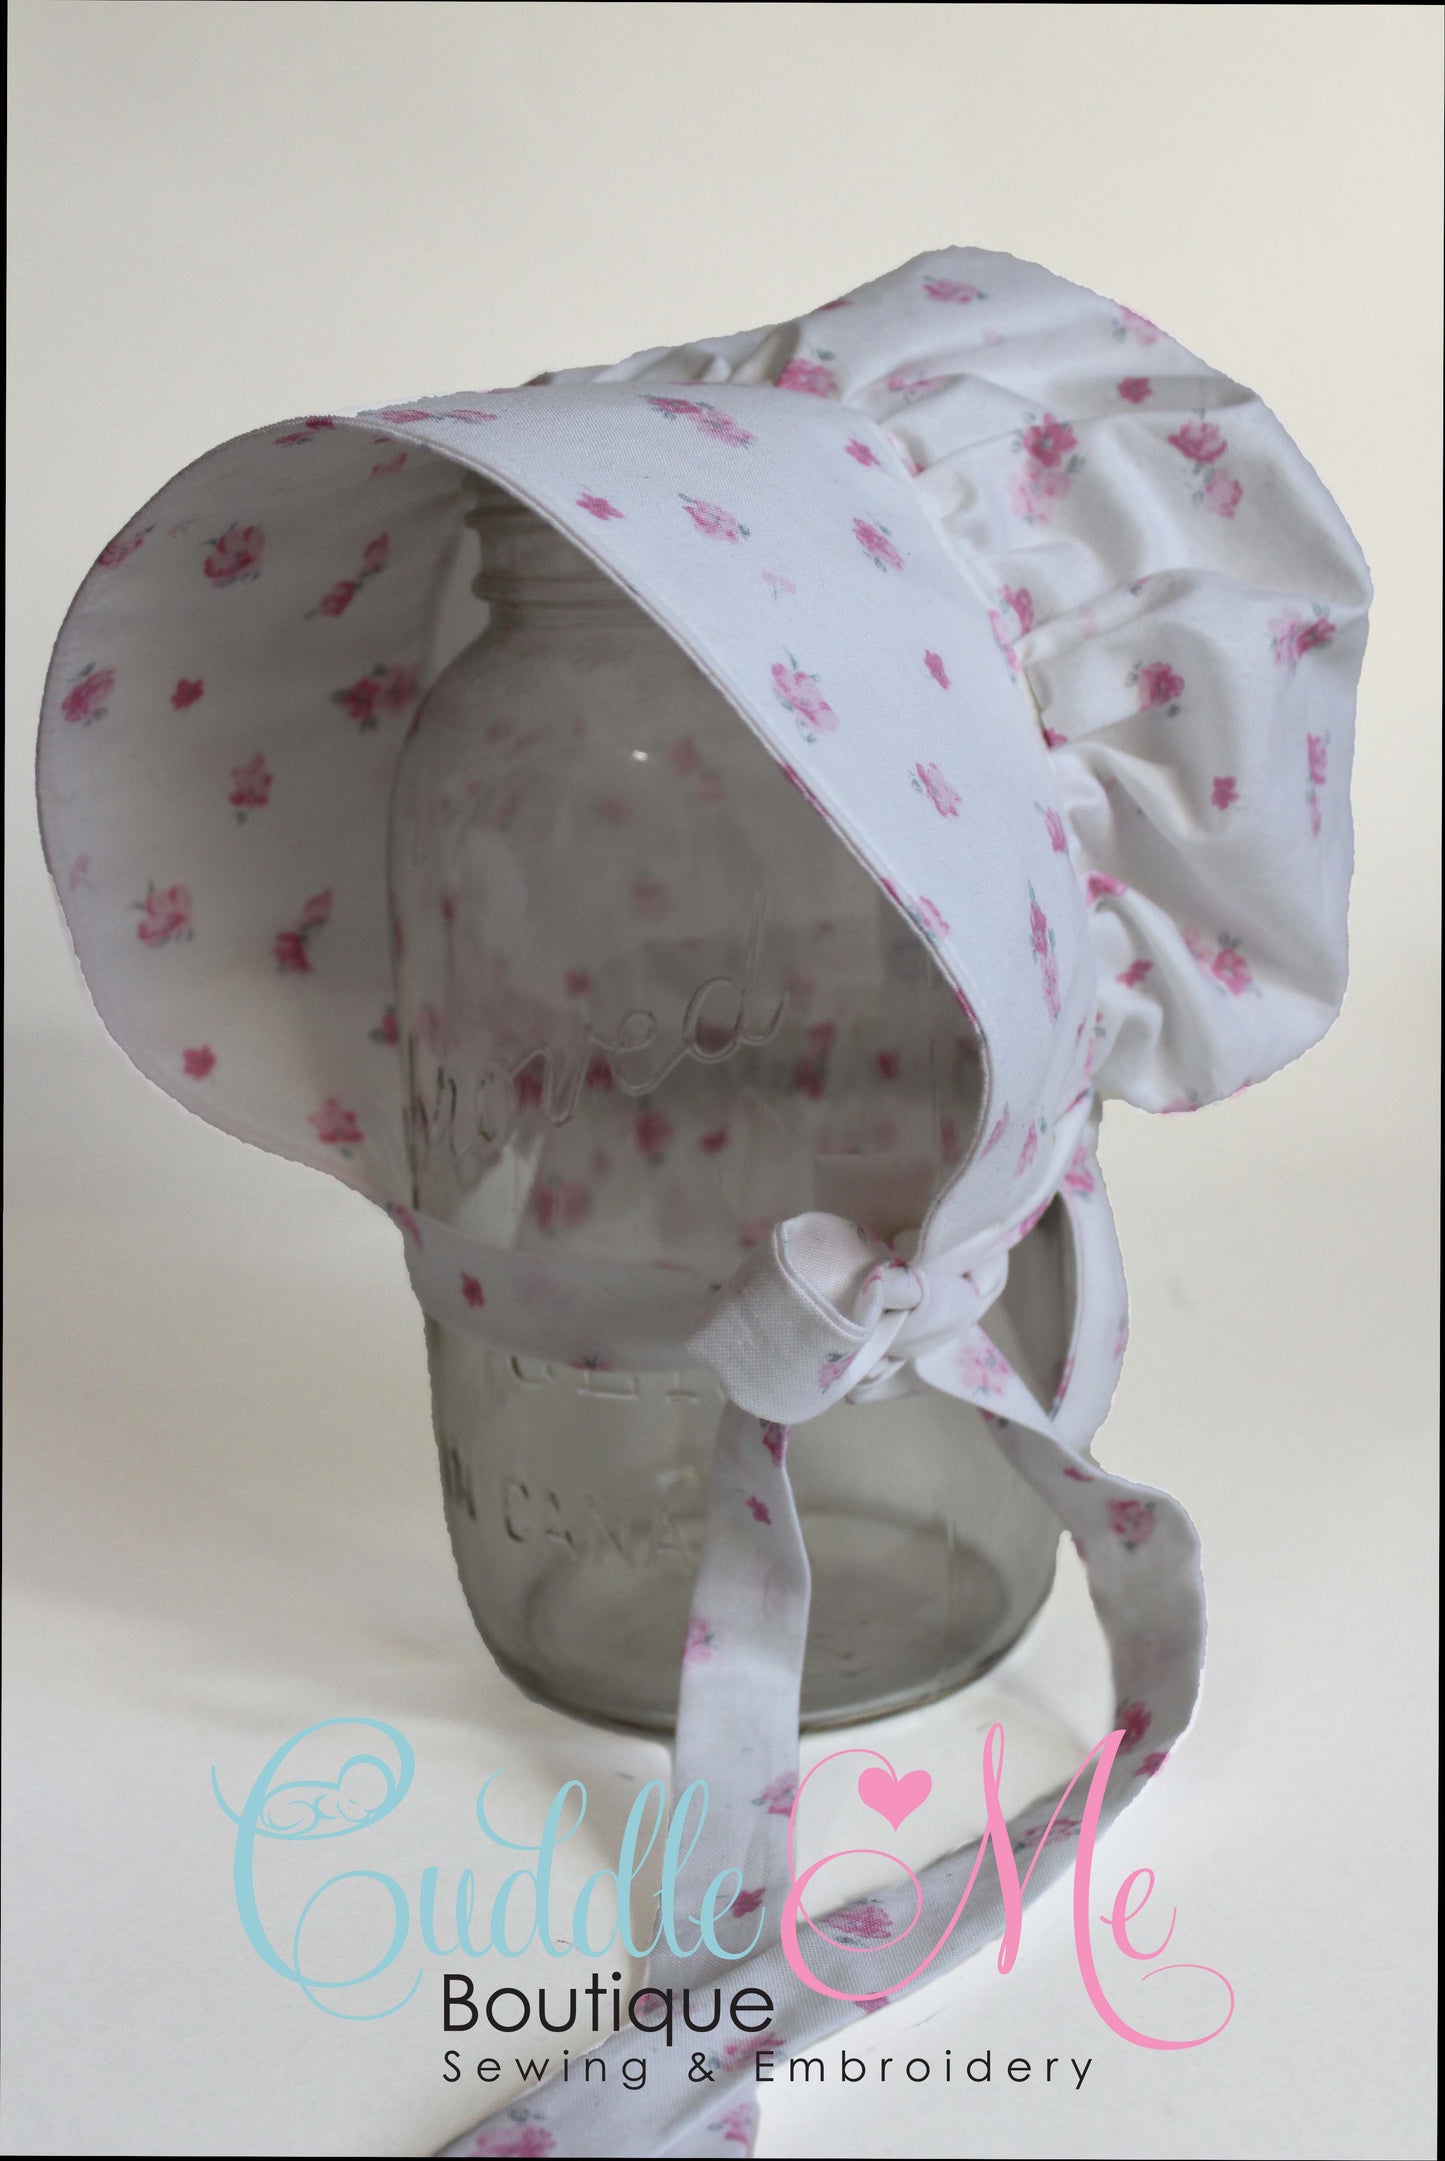 Vintage White Bonnet with Pink Flowers Prairie Bonnet